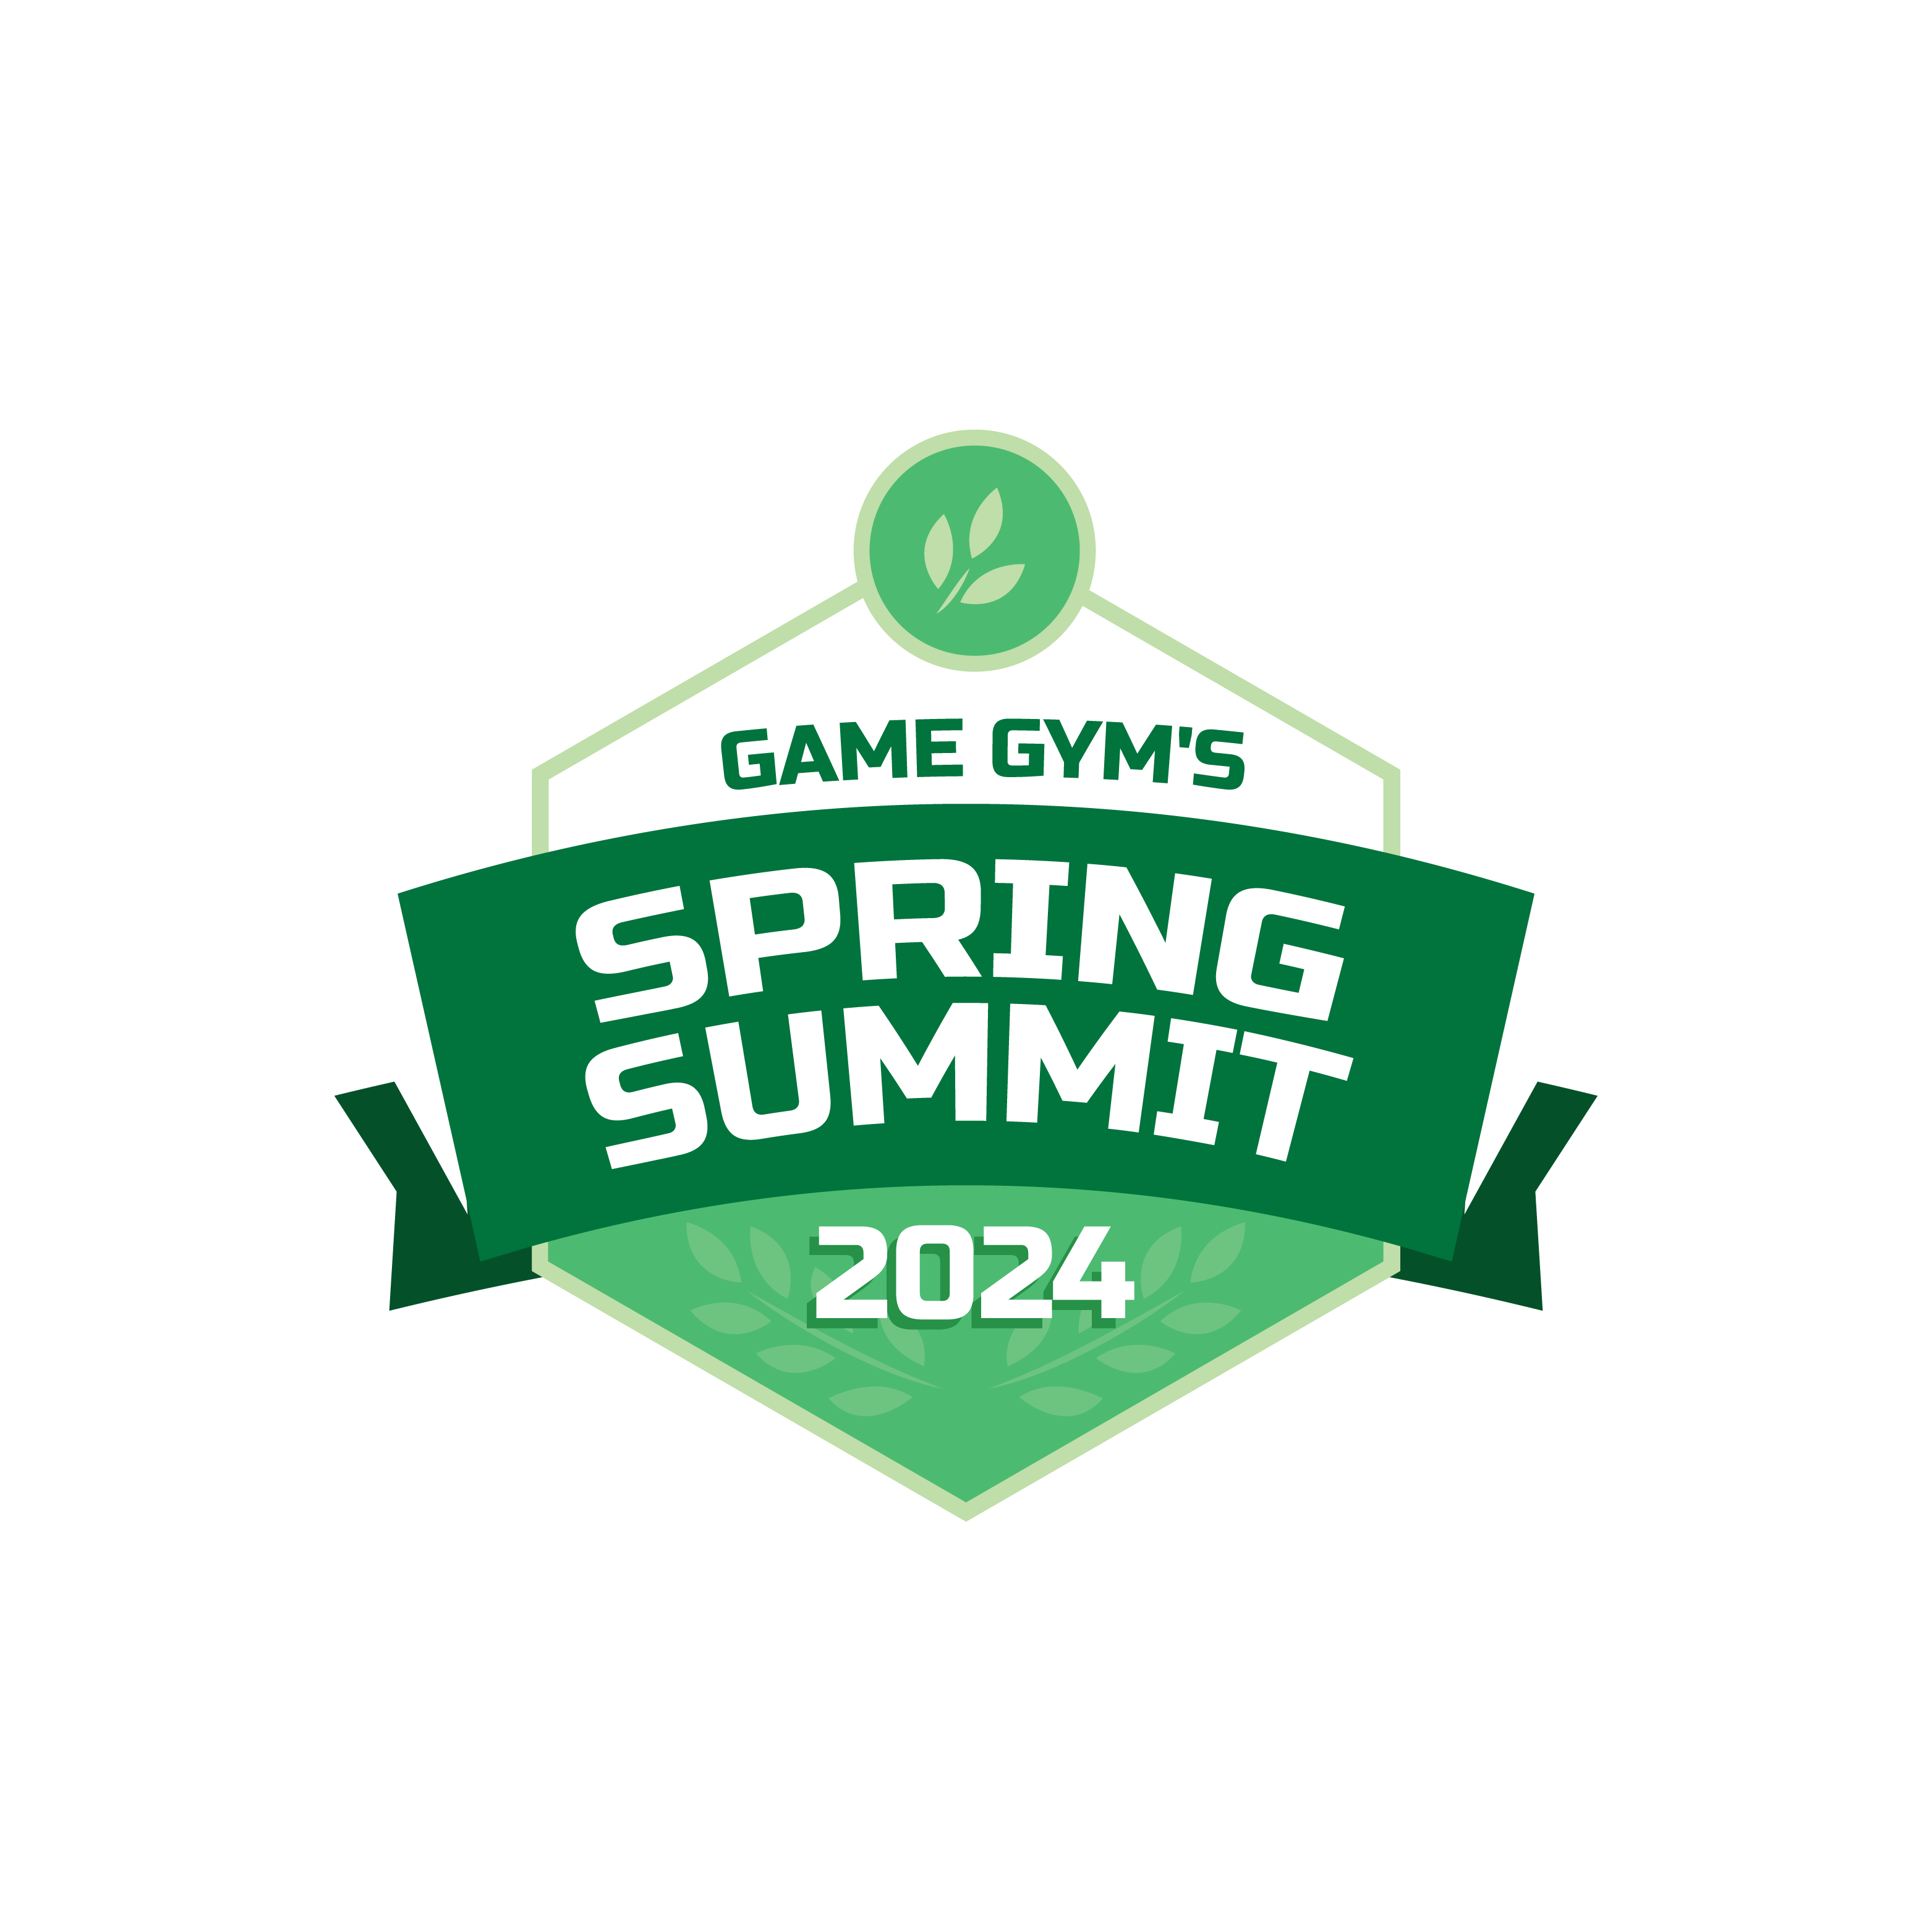 Game Gym's Spring Summit Host by Radford University April 6-7